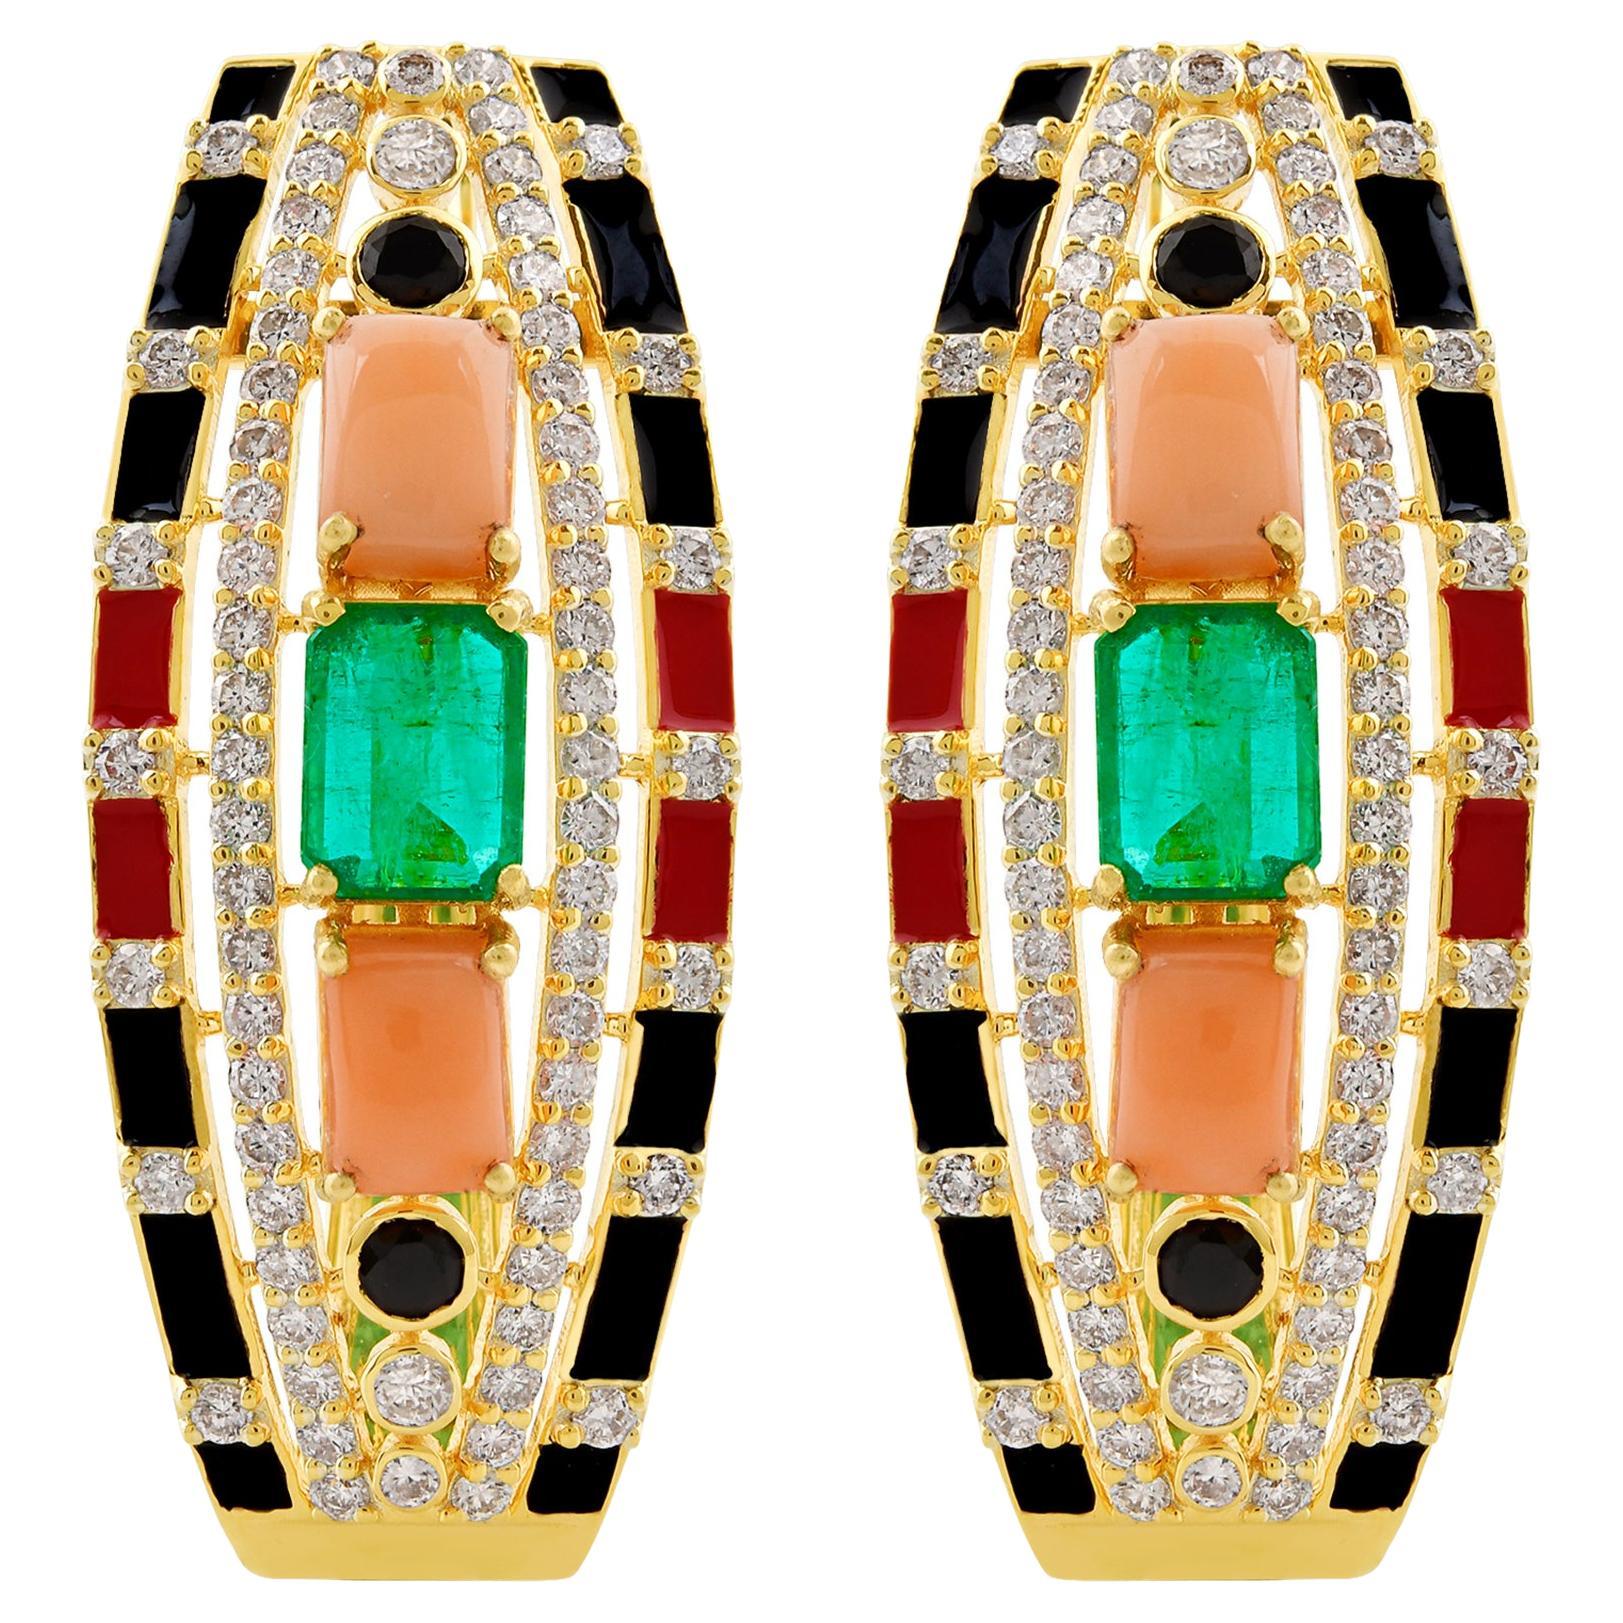 Black Onyx Coral Emerald Stud Earrings Diamond 18k Yellow Gold Enamel Jewelry